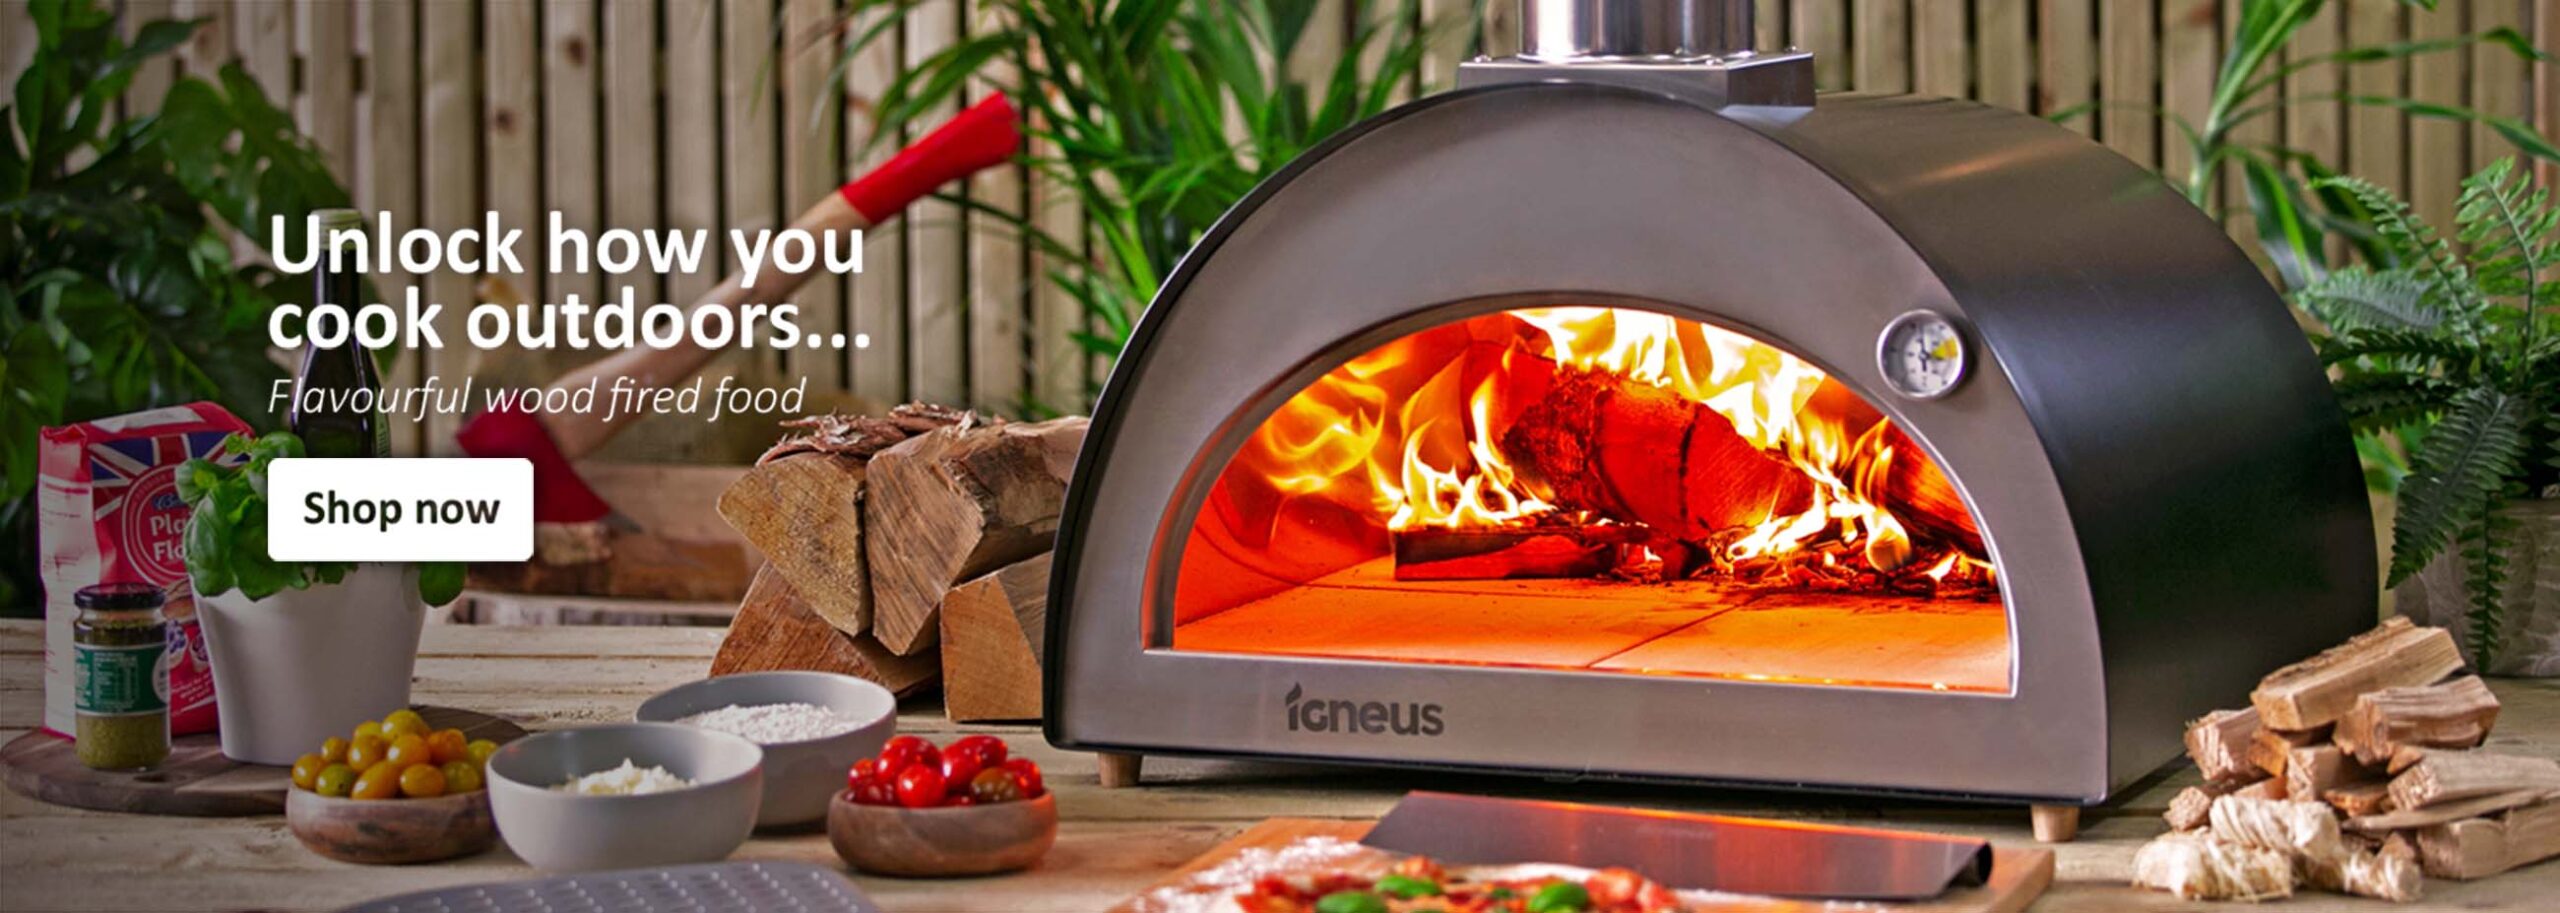 Igneus wood fired pizza ovens uk - igneus classico wood fired pizza oven